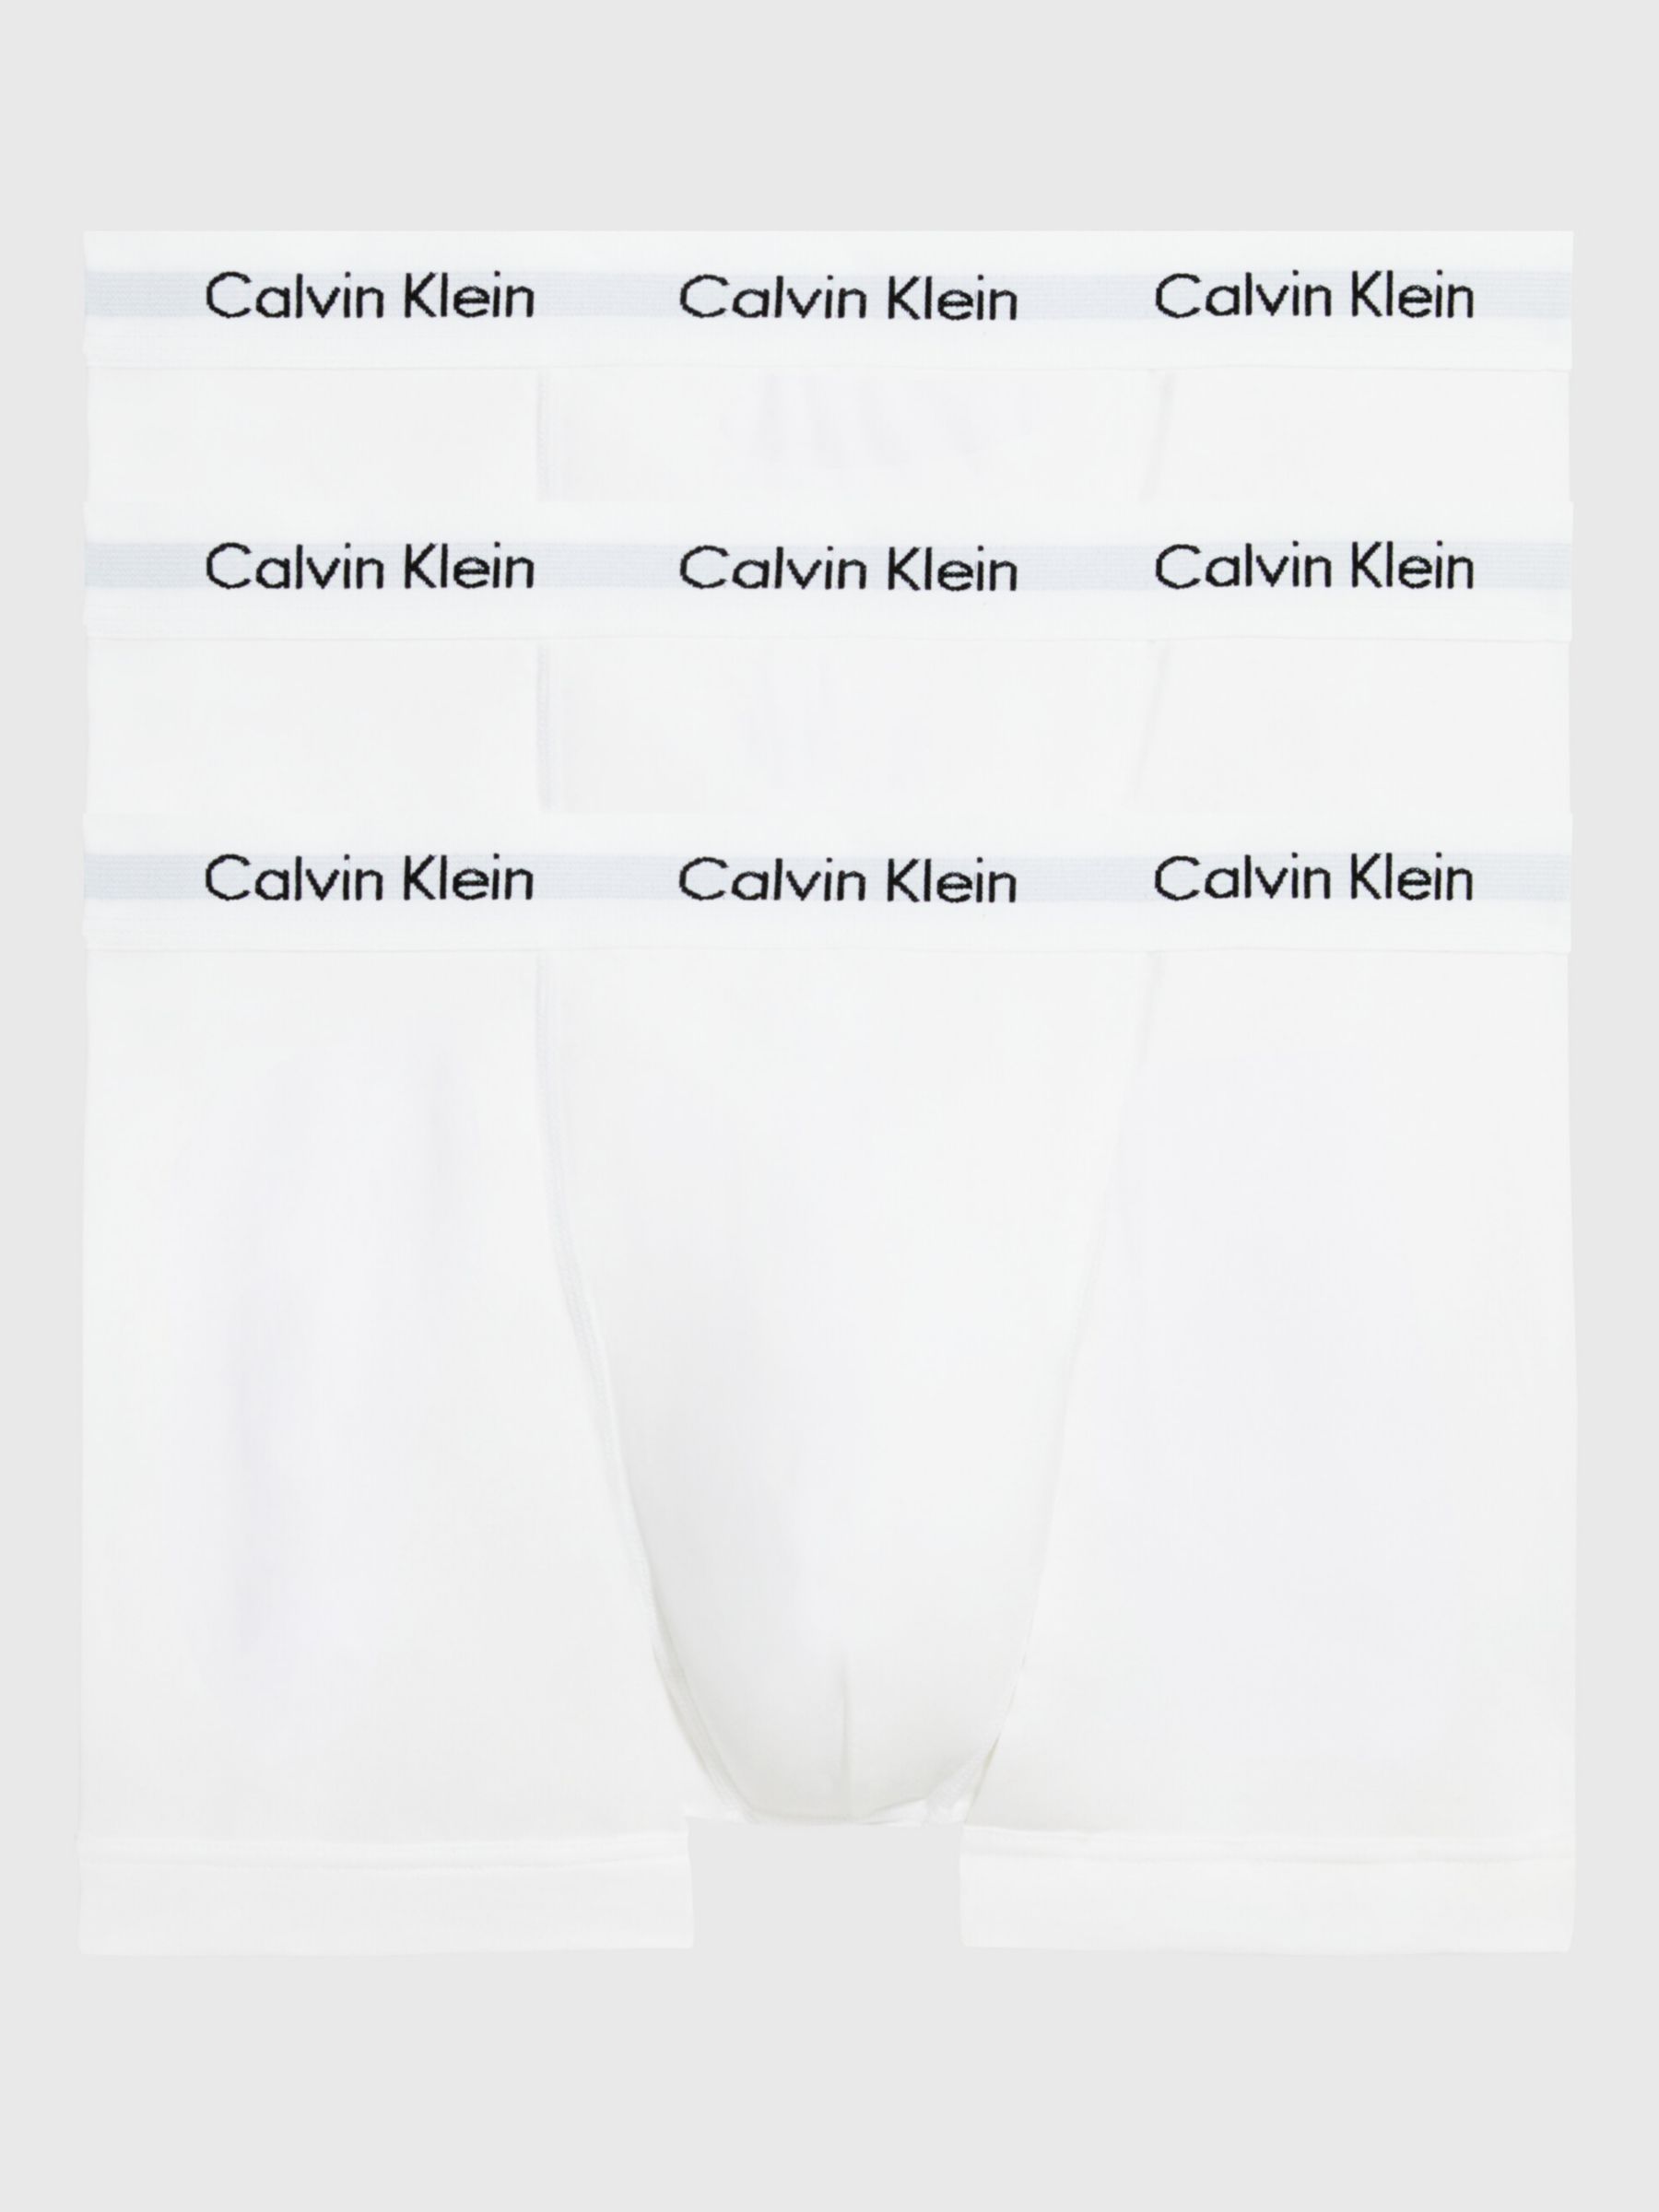 Calvin Klein Regular Cotton Stretch Trunks, Pack of 3, White